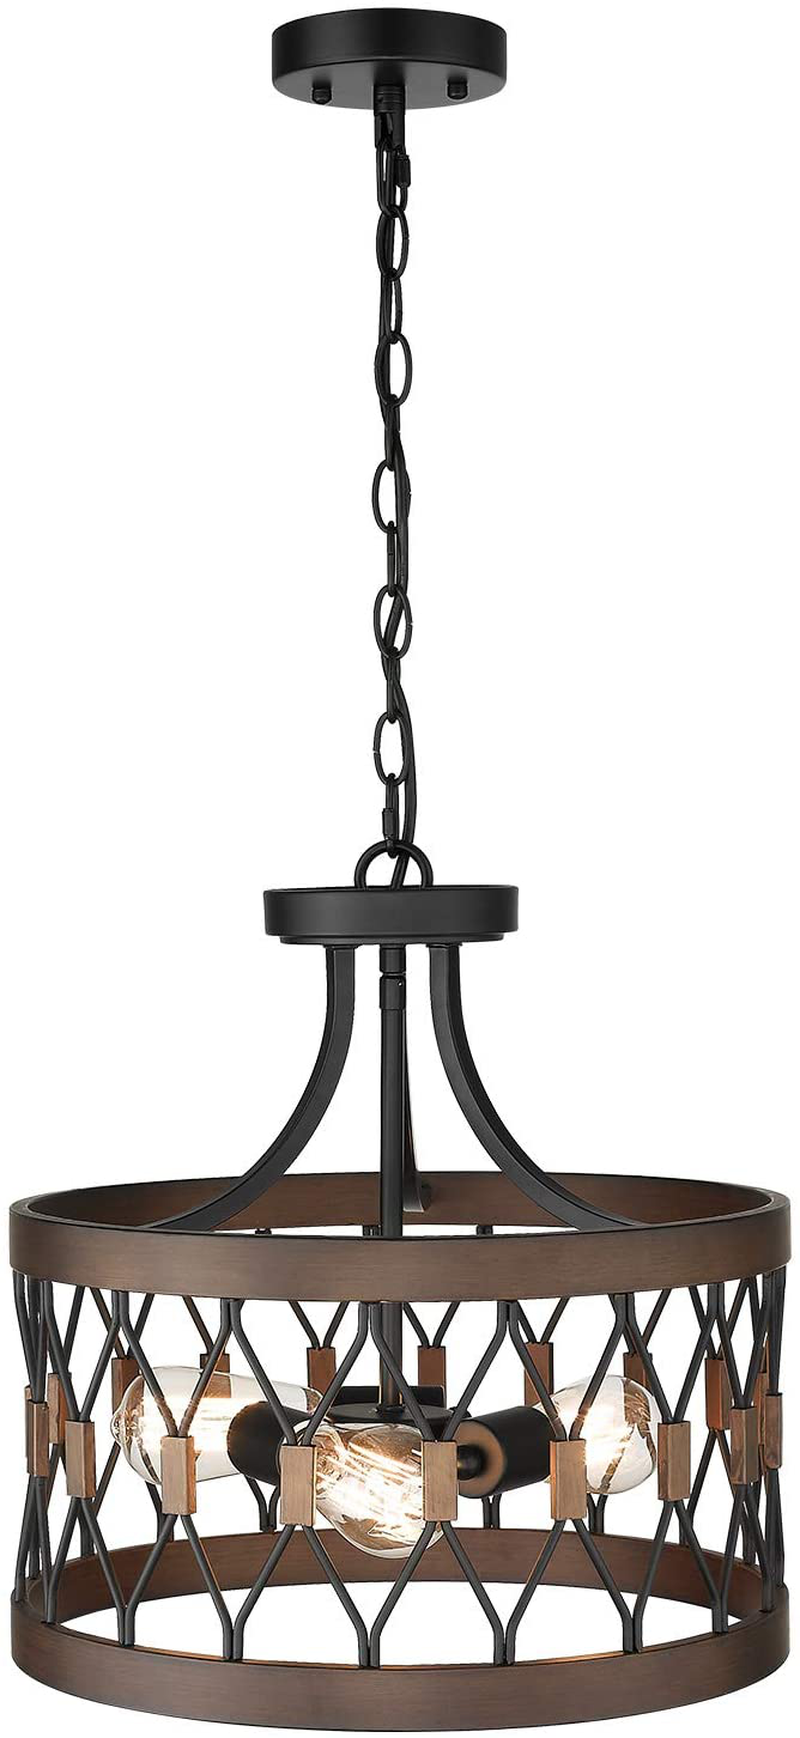 Osimir Semi-Flush Mount Ceiling Light, 3-Light Ceiling Light Fixture, 16-Inch Cage Drum Pendant Hanging in Wood and Black Finish, PE9170-3